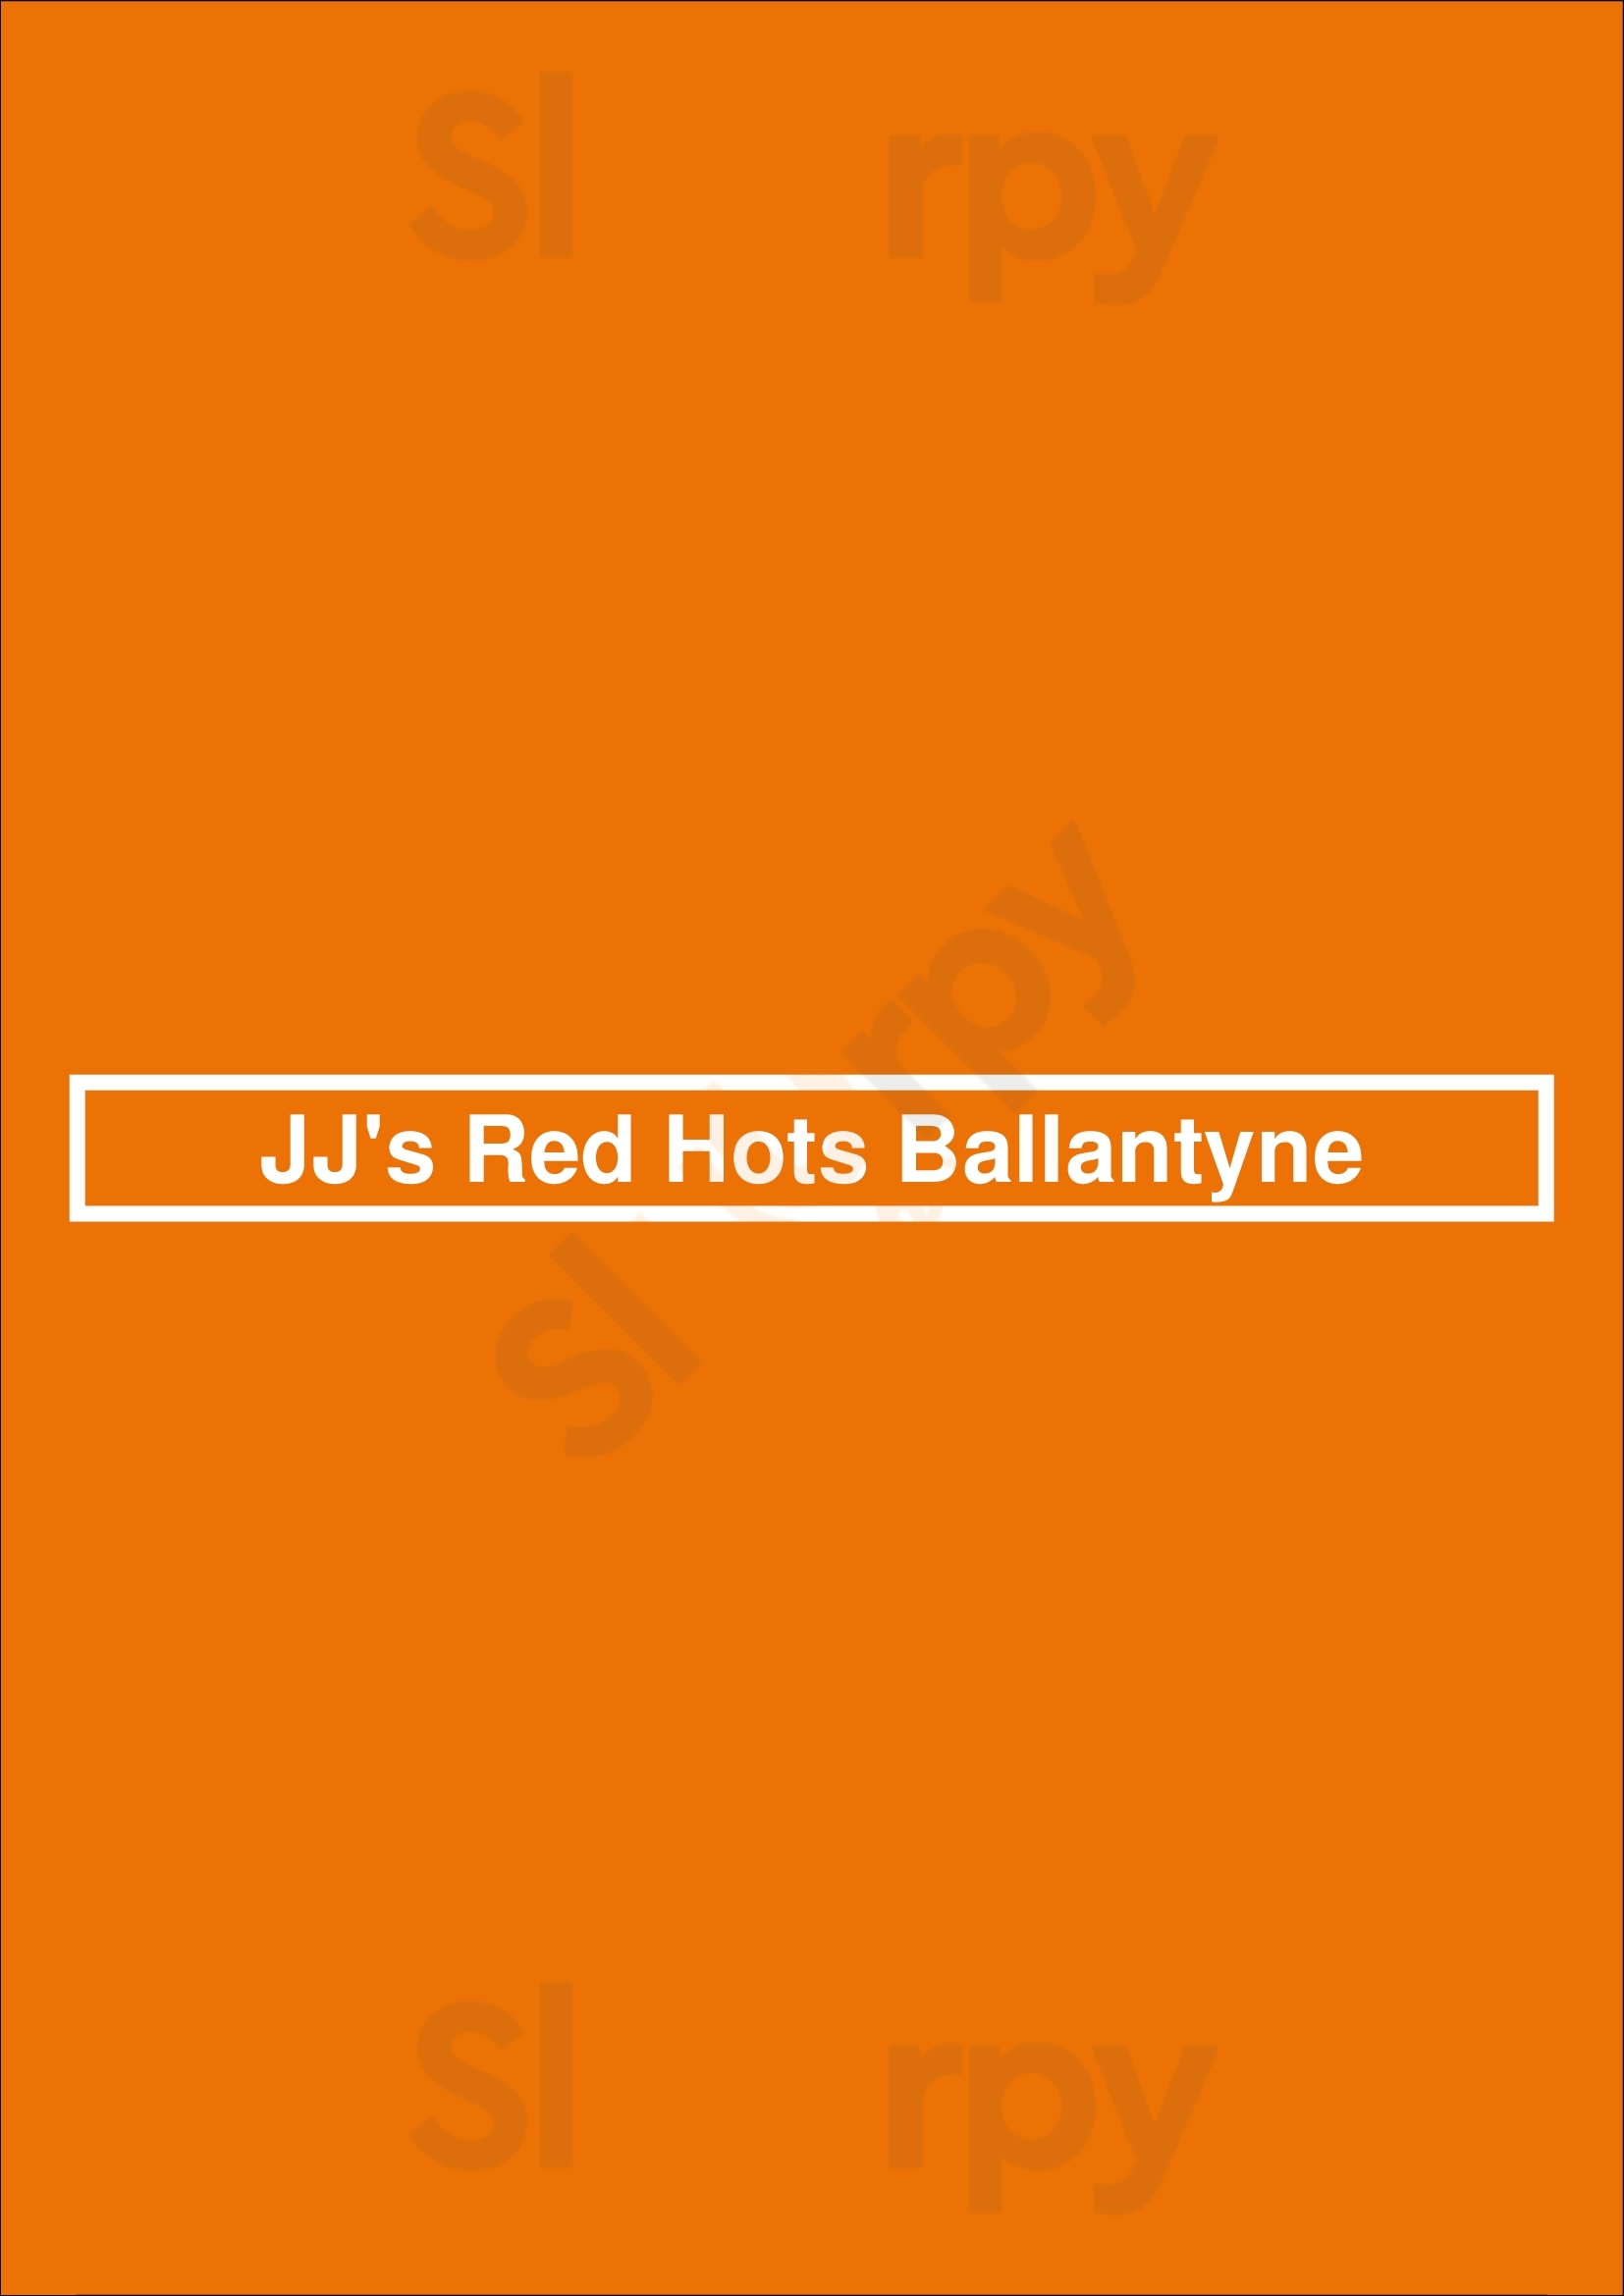 Jj's Red Hots Ballantyne Charlotte Menu - 1